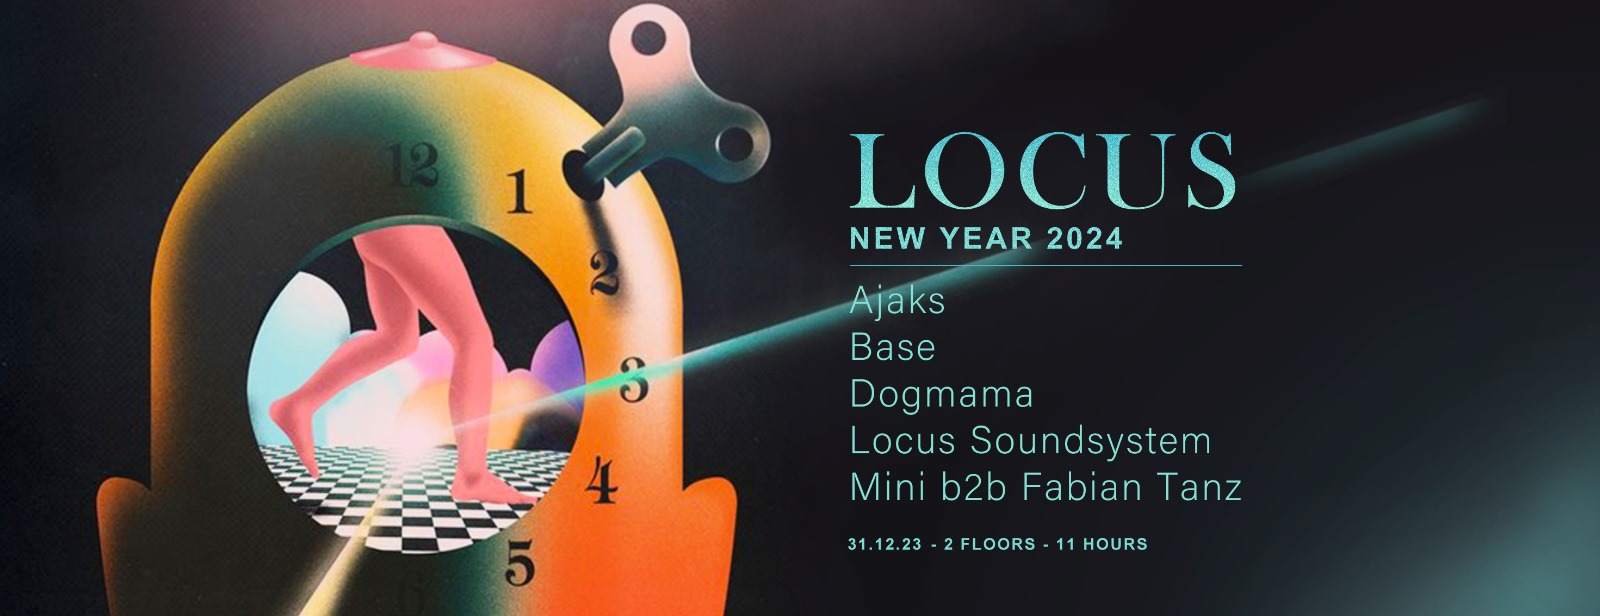 Locus New Year 2024 - フライヤー表